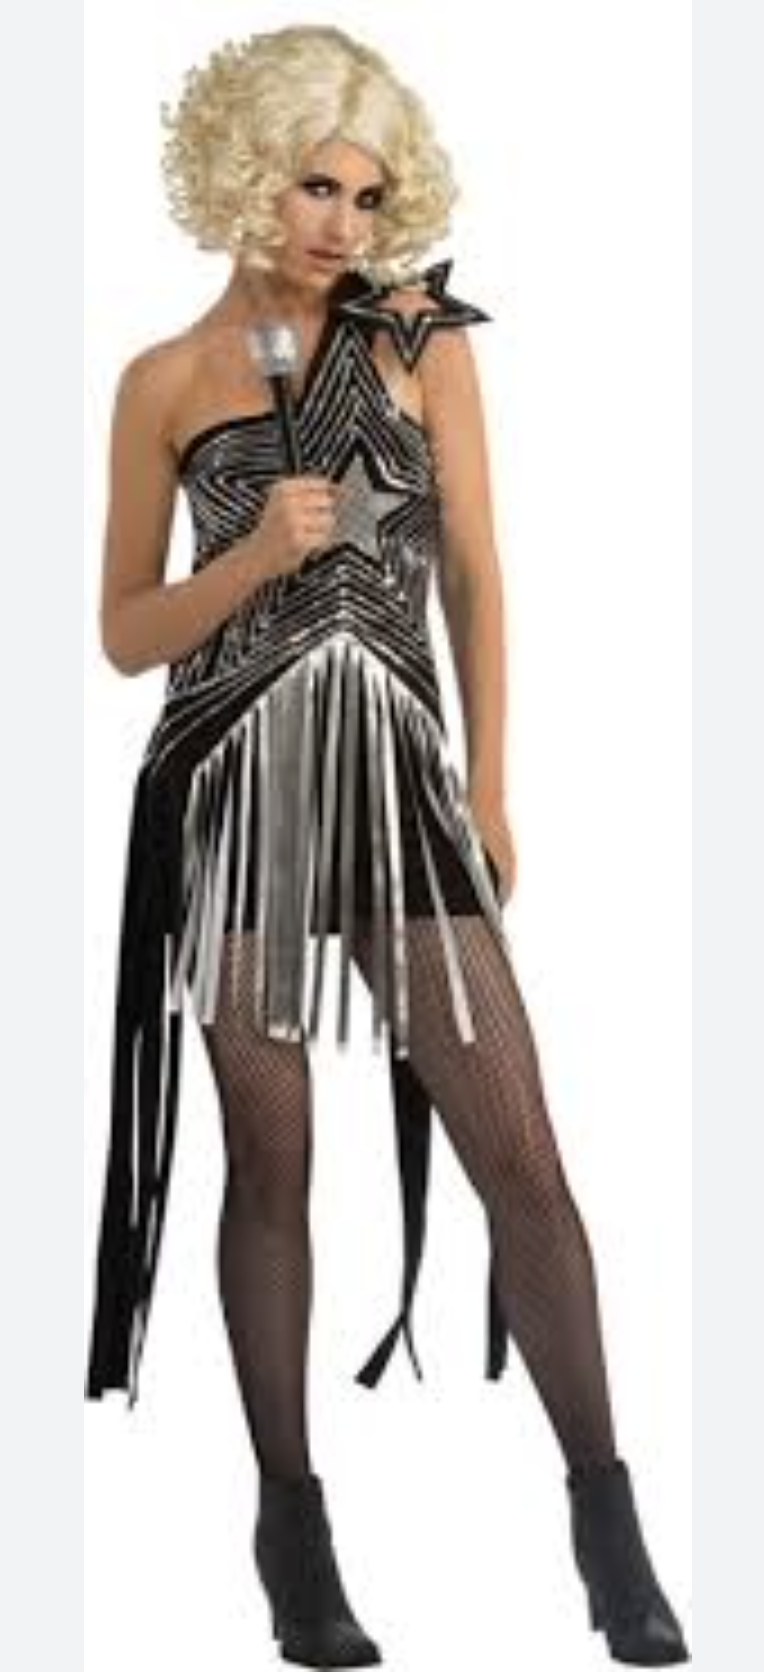 Image 1 of Licensed Lady Gaga Rock Star Adult Black Silver Star Costume, Rubies 889977